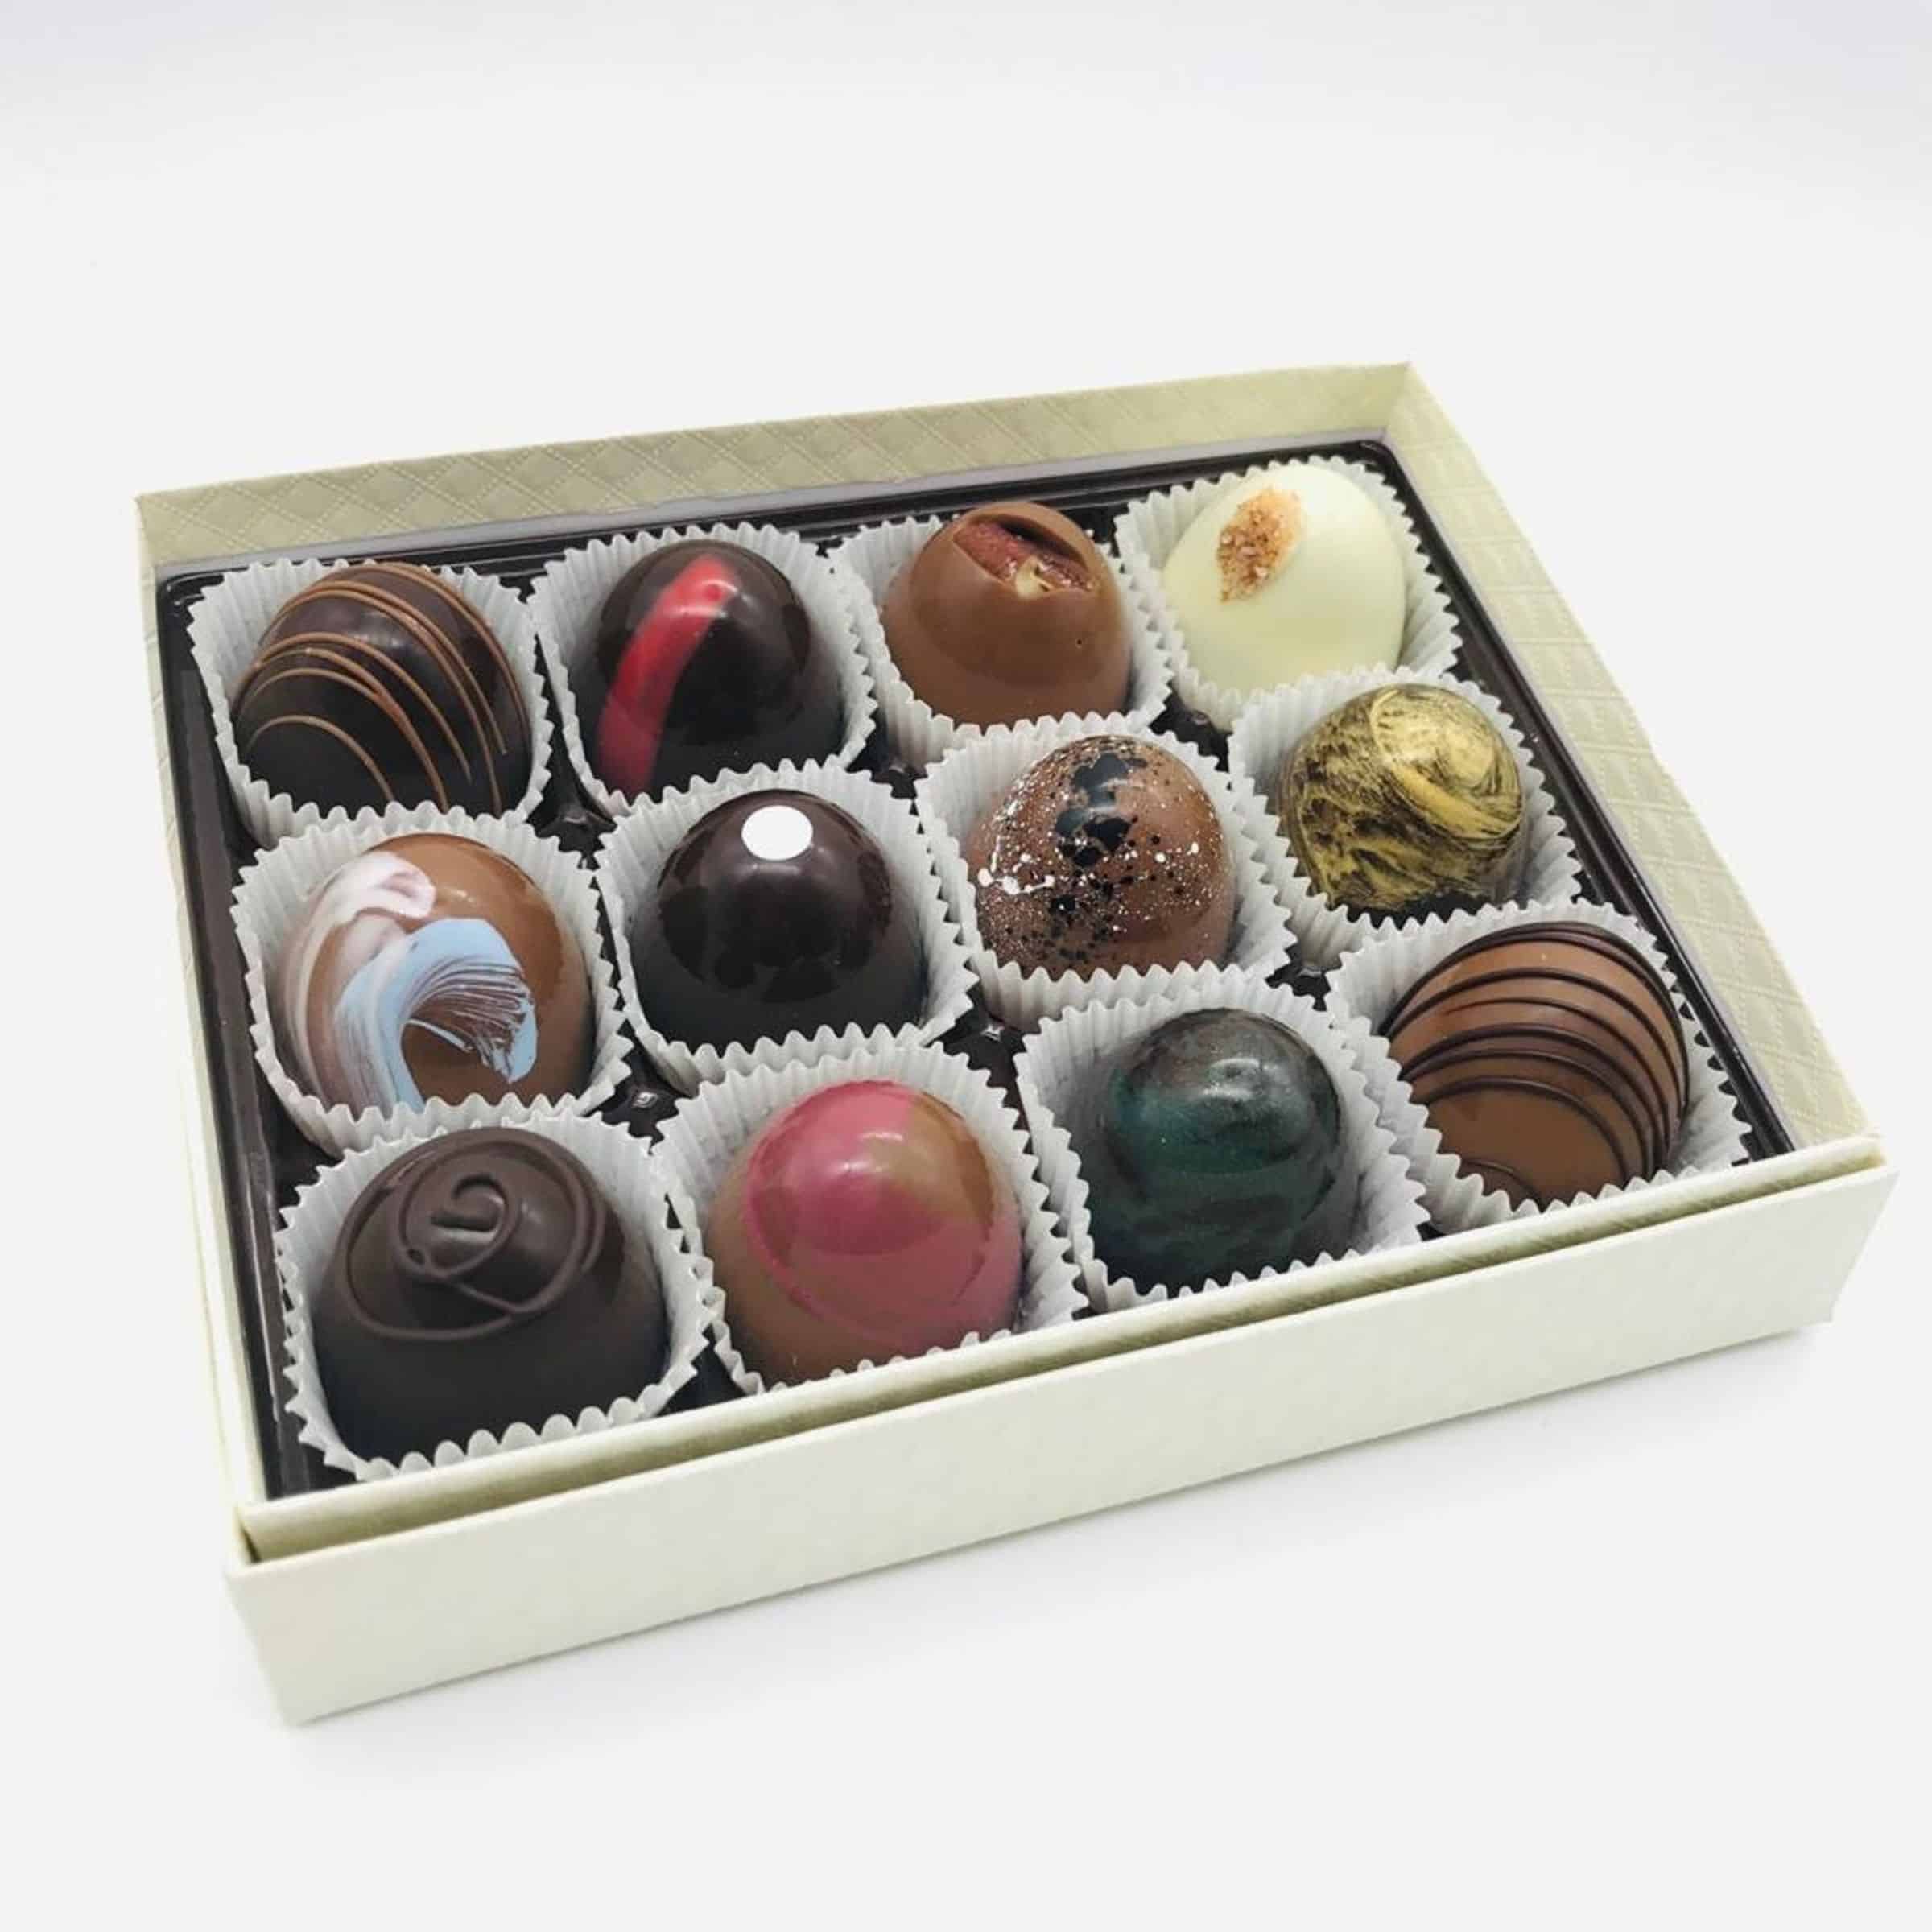 A box of artisan chocolates.